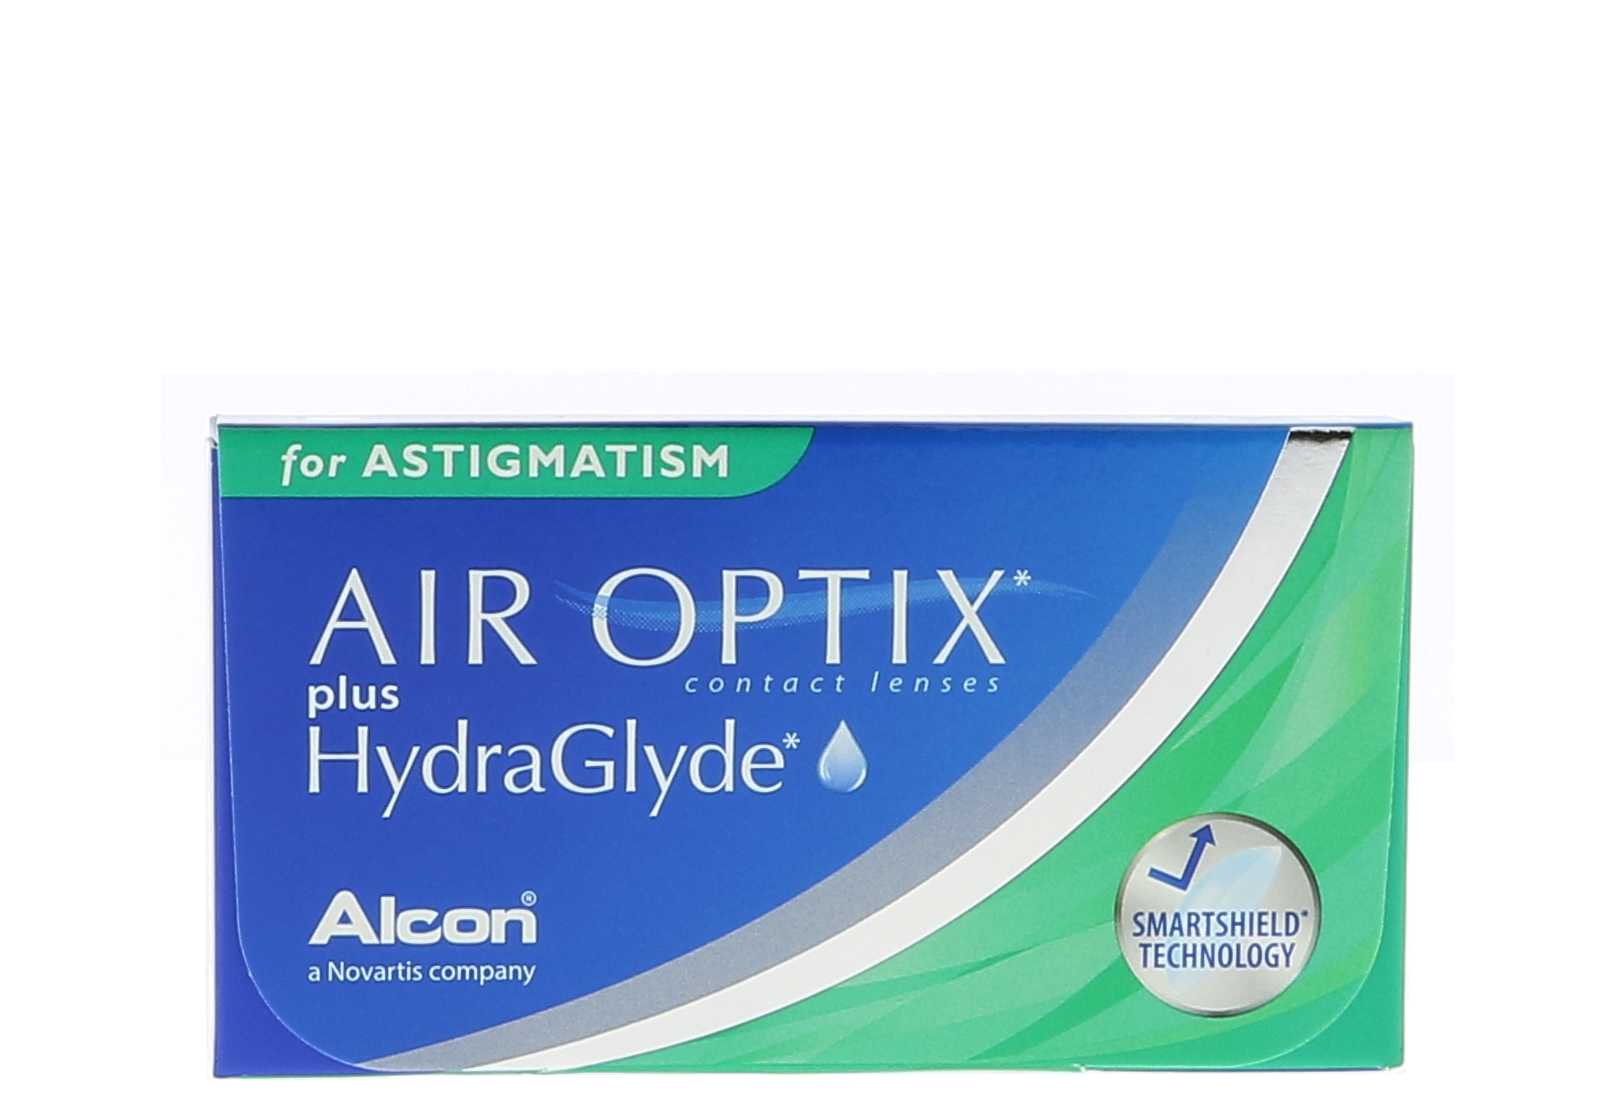  AIR OPTIX PLUS HYDRAGLYDE FOR ASTIGMATISM ALCON